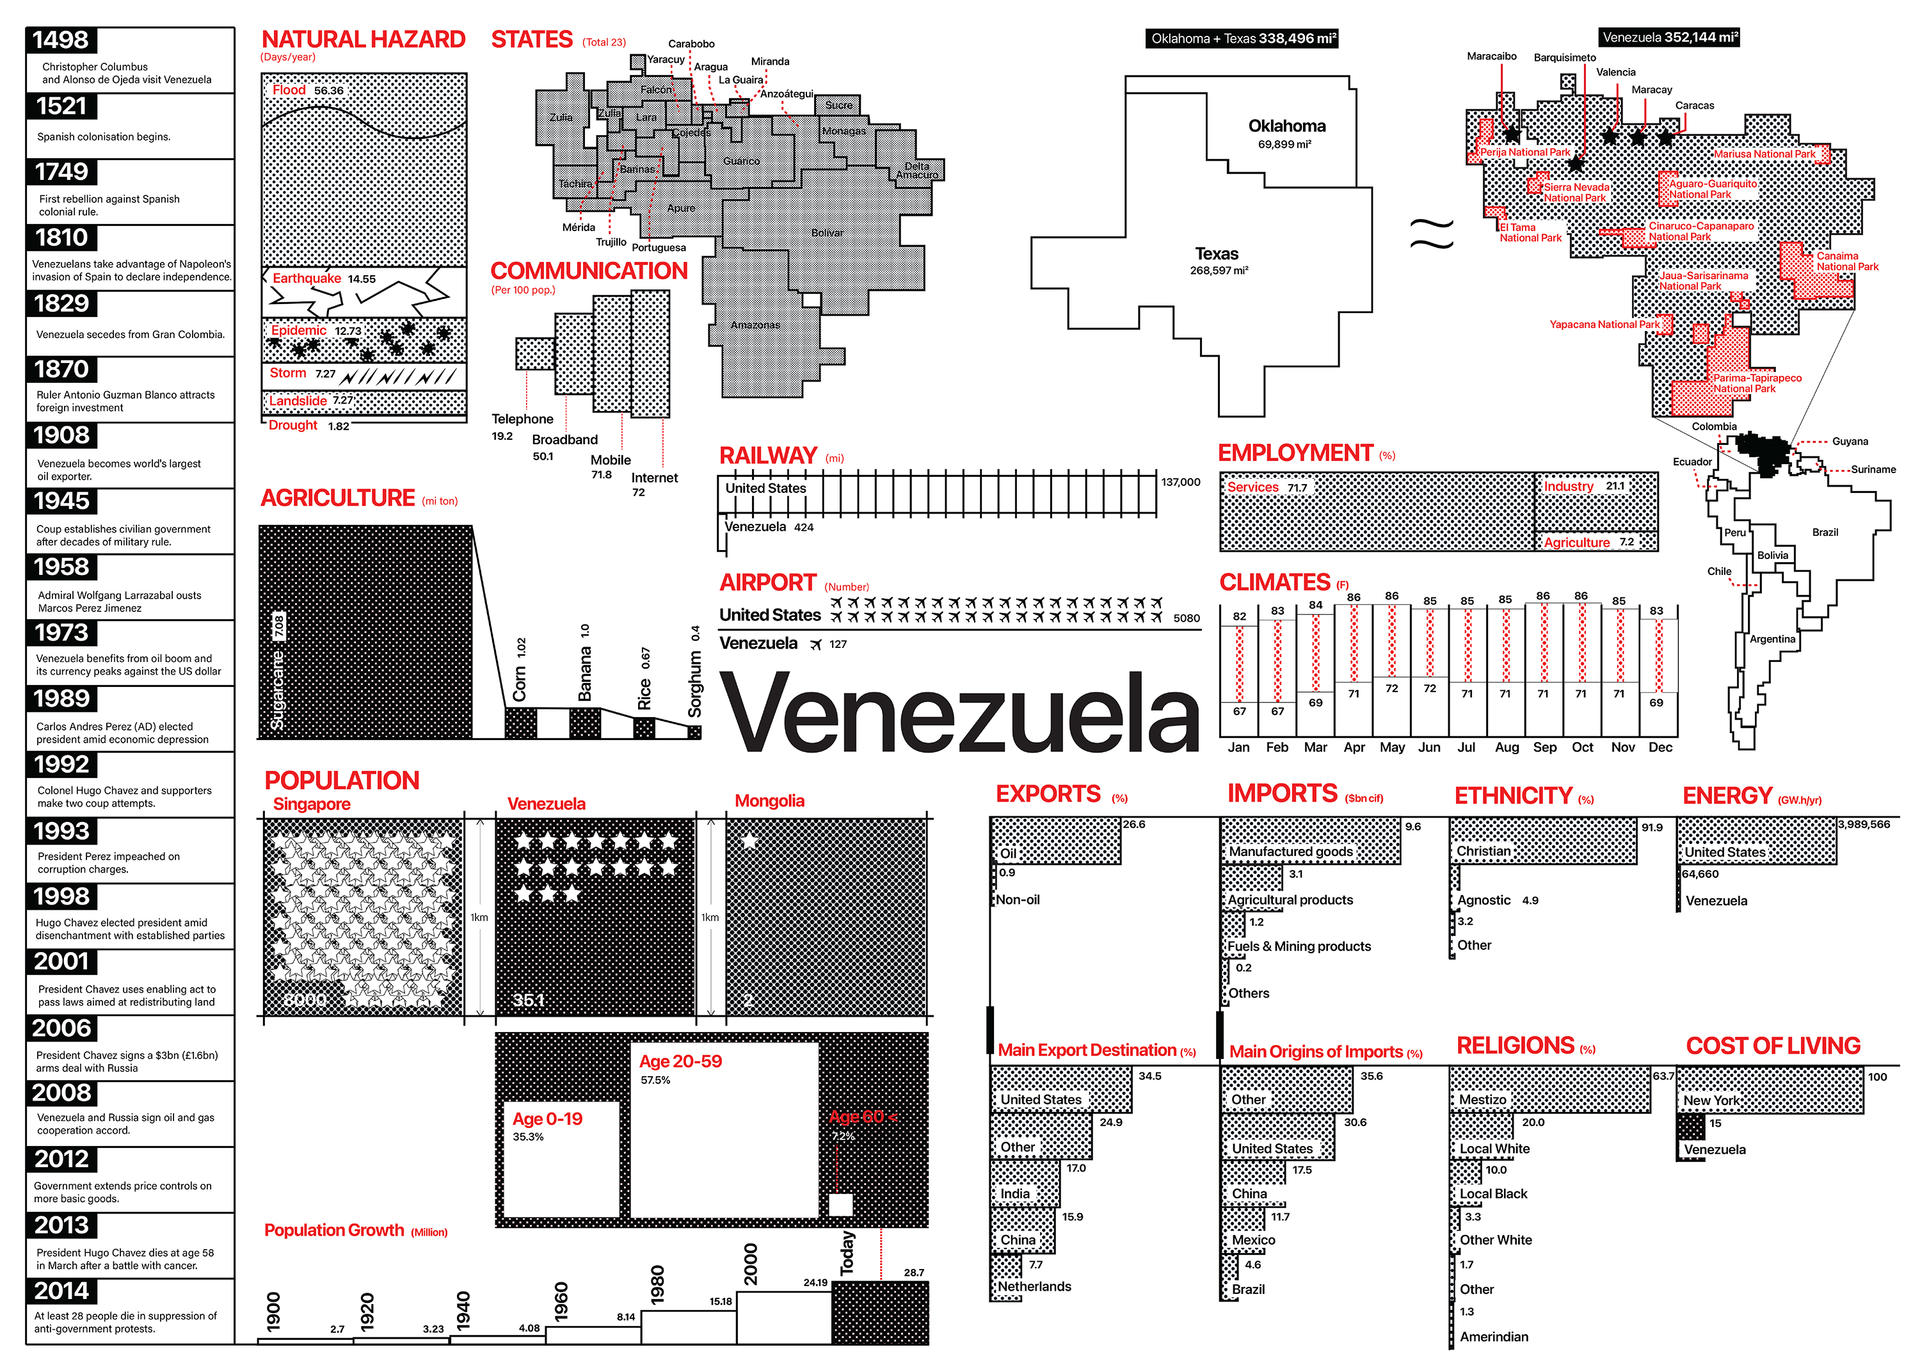 Venezuela’s data is presented in one newspaper spread.